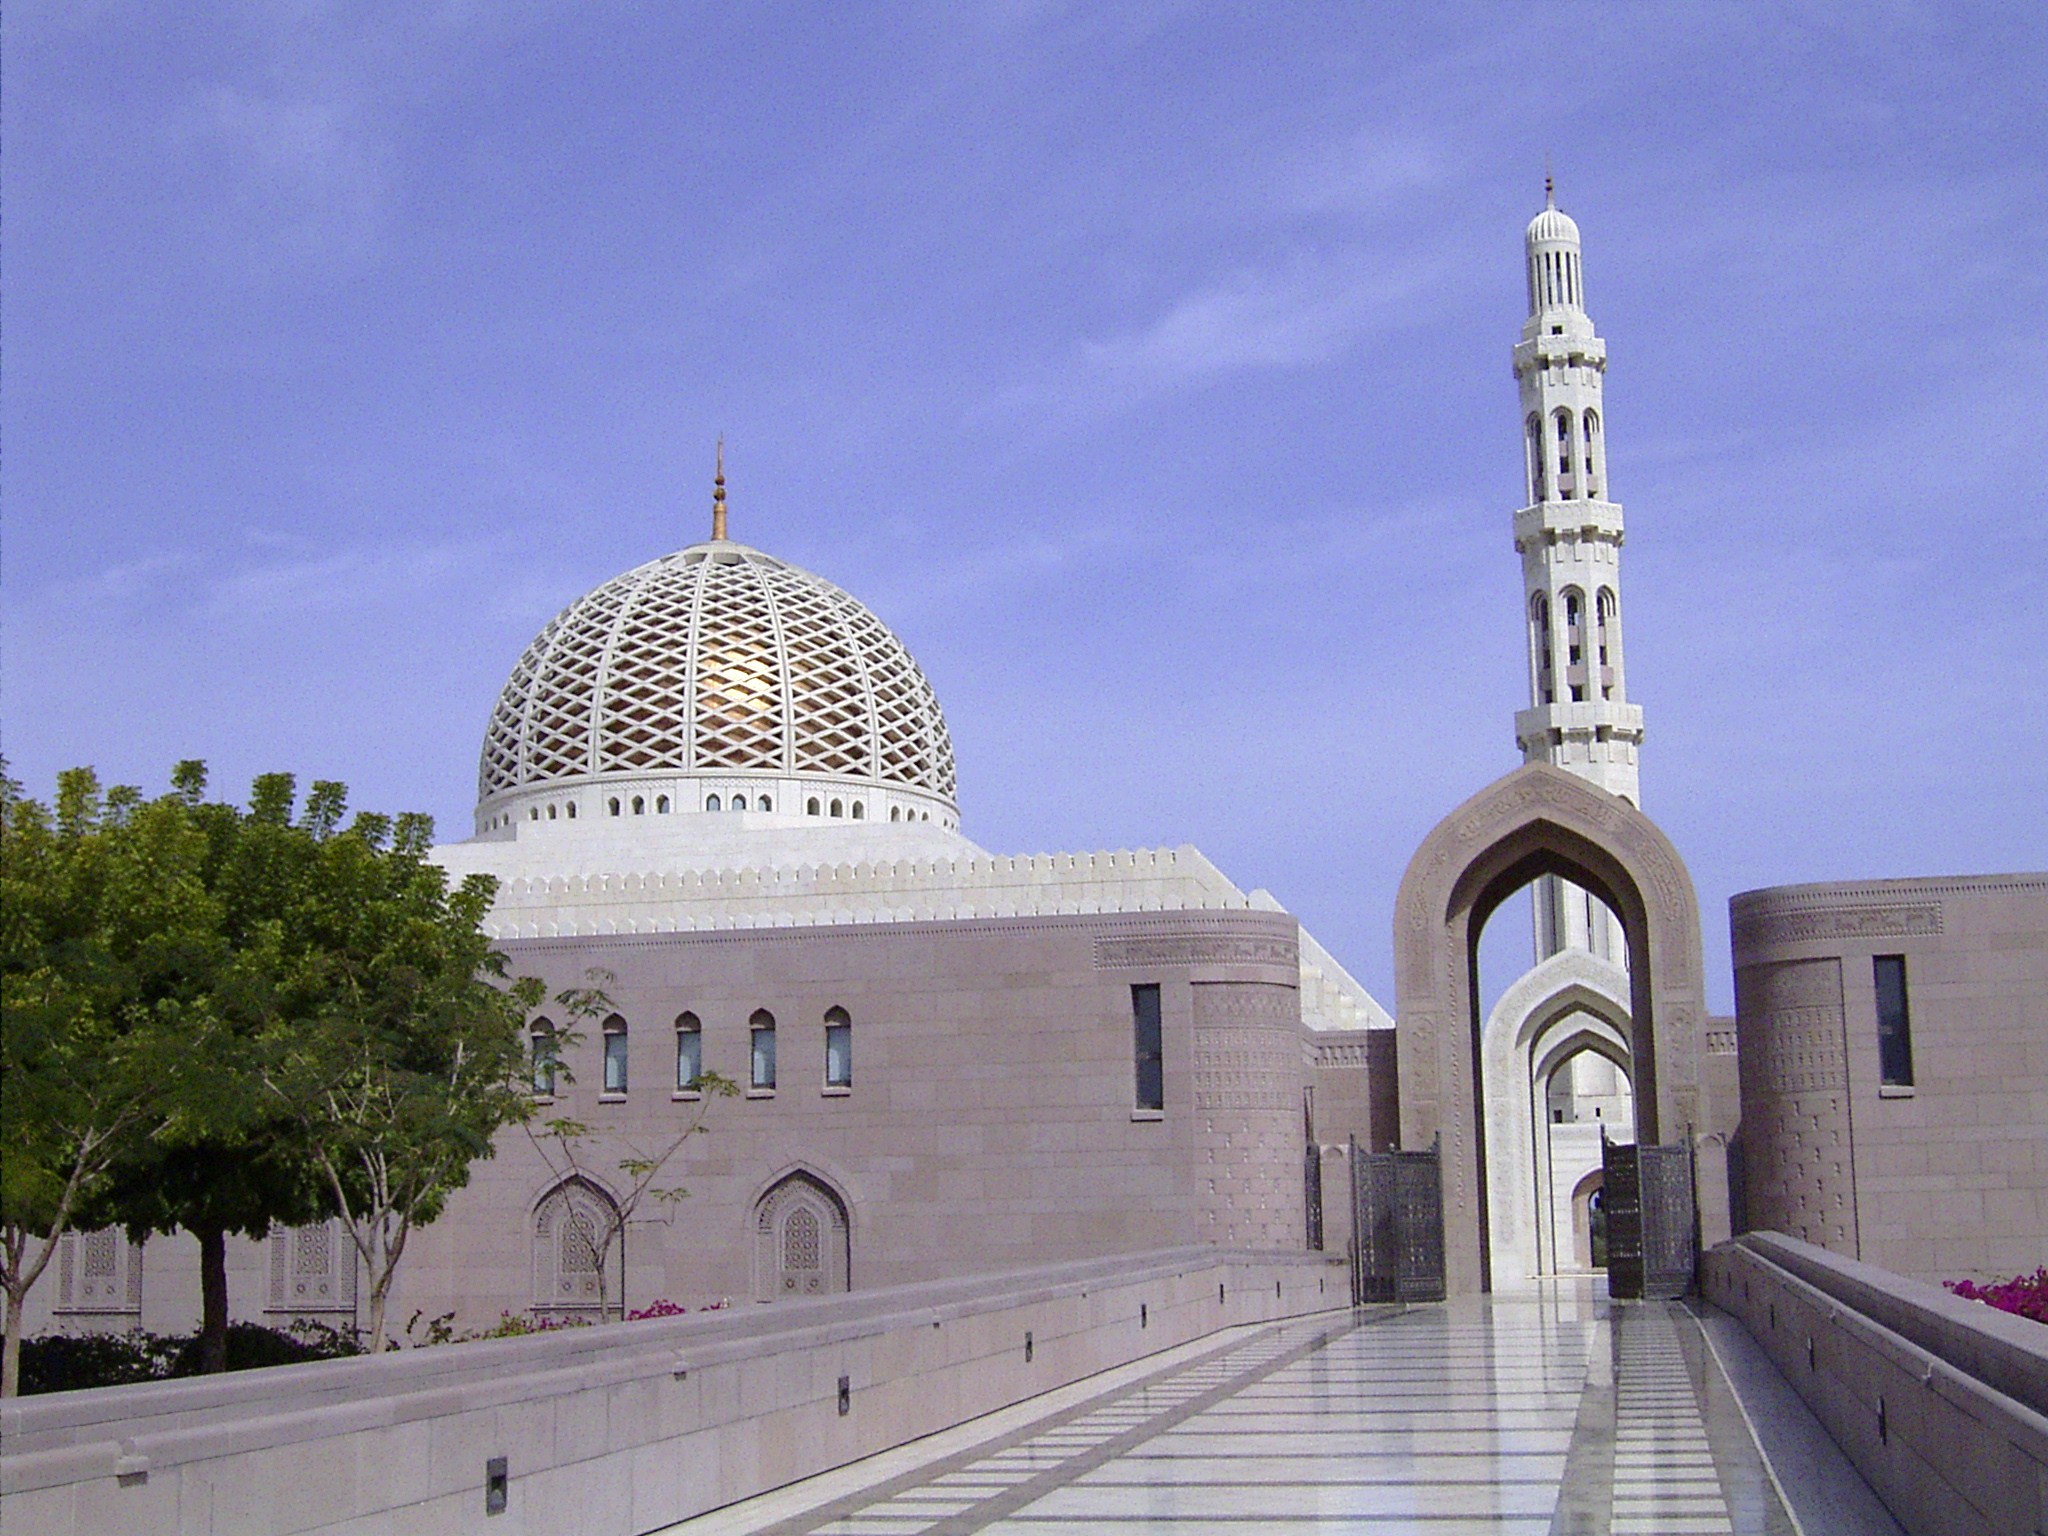 http://yeahthatskosher.com/wp-content/uploads/2008/10/sultan_qaboos_grand_mosque_muscat_oman.jpg